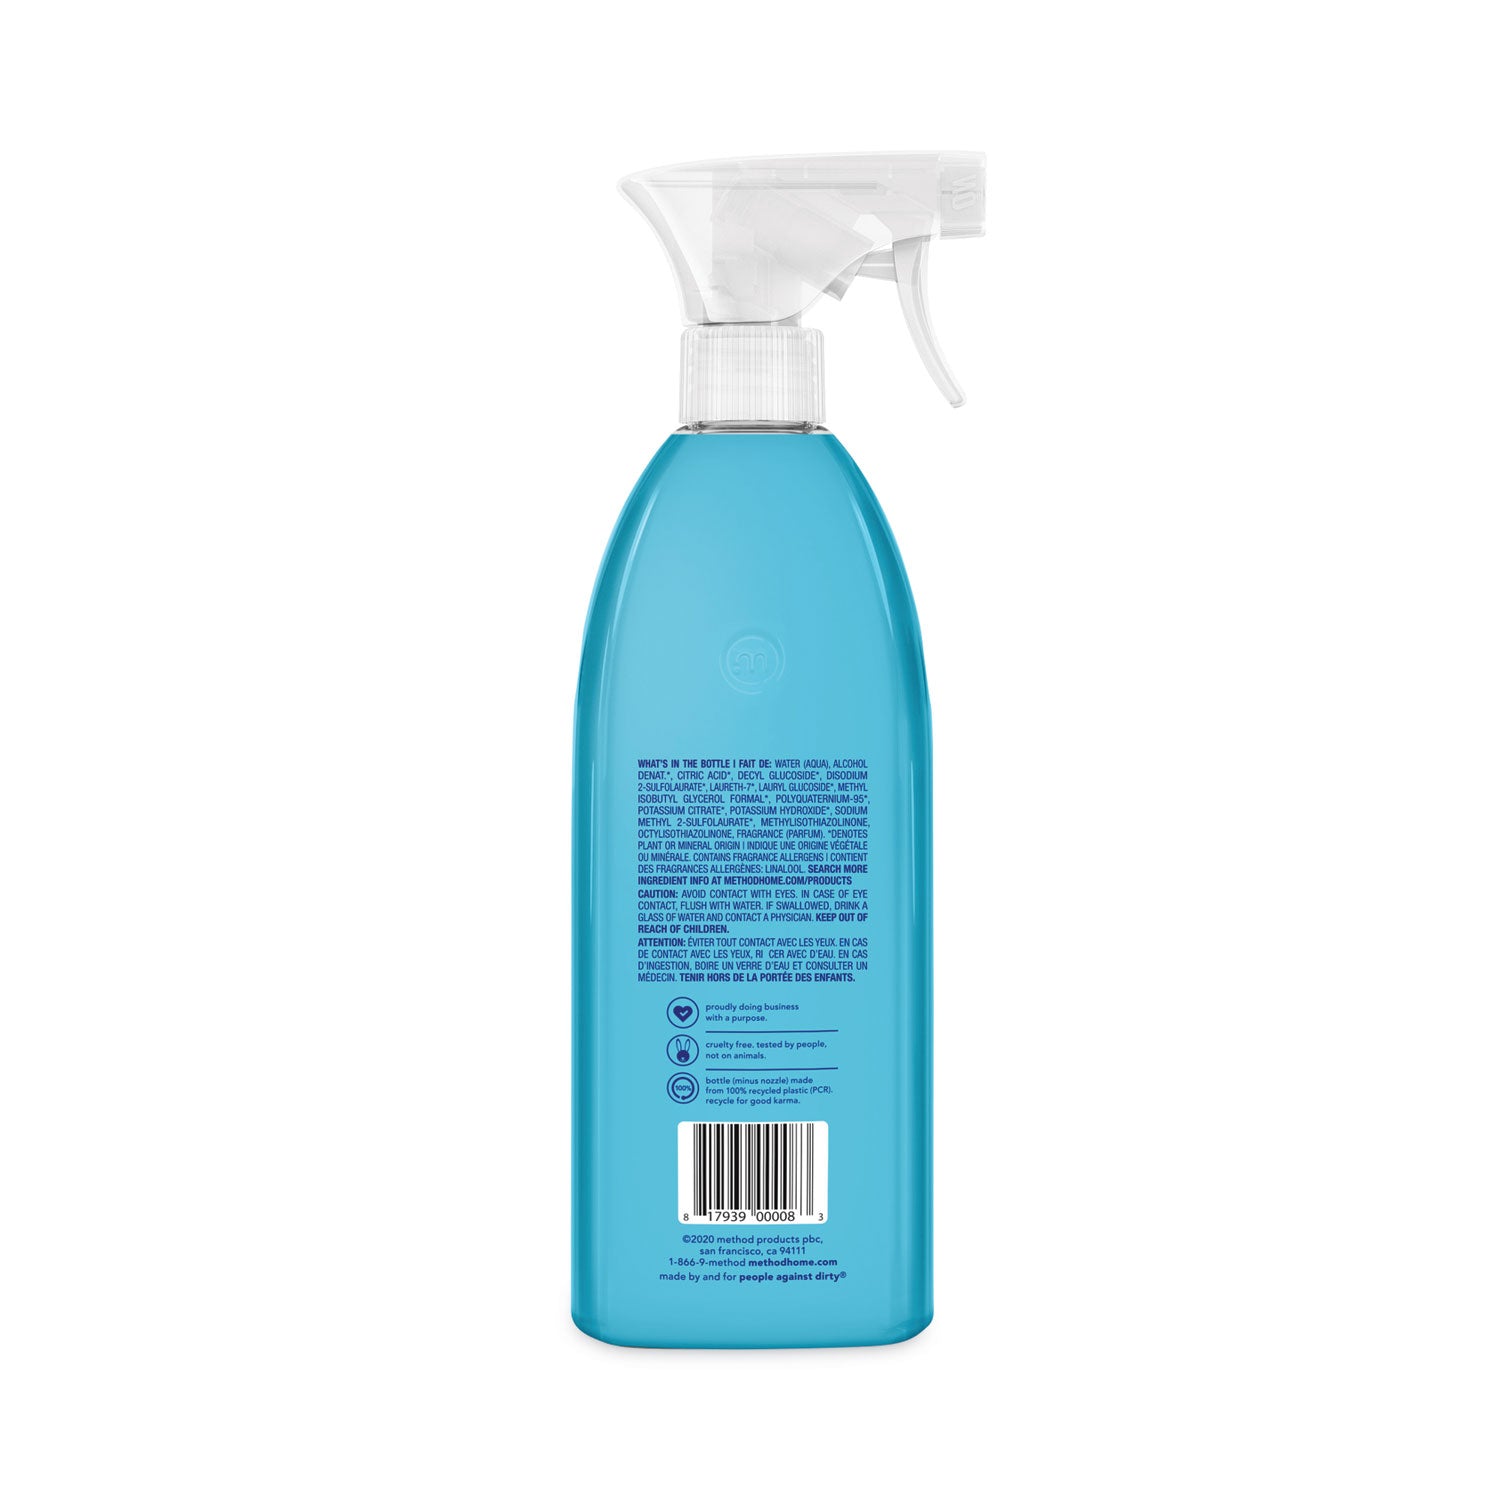 Method Daily Shower Spray Cleaner - 28 fl oz (0.9 quart) - Eucalyptus Mint Scent - 8 / Carton - Pleasant Scent, Non-toxic, Disinfectant - Blue - 2